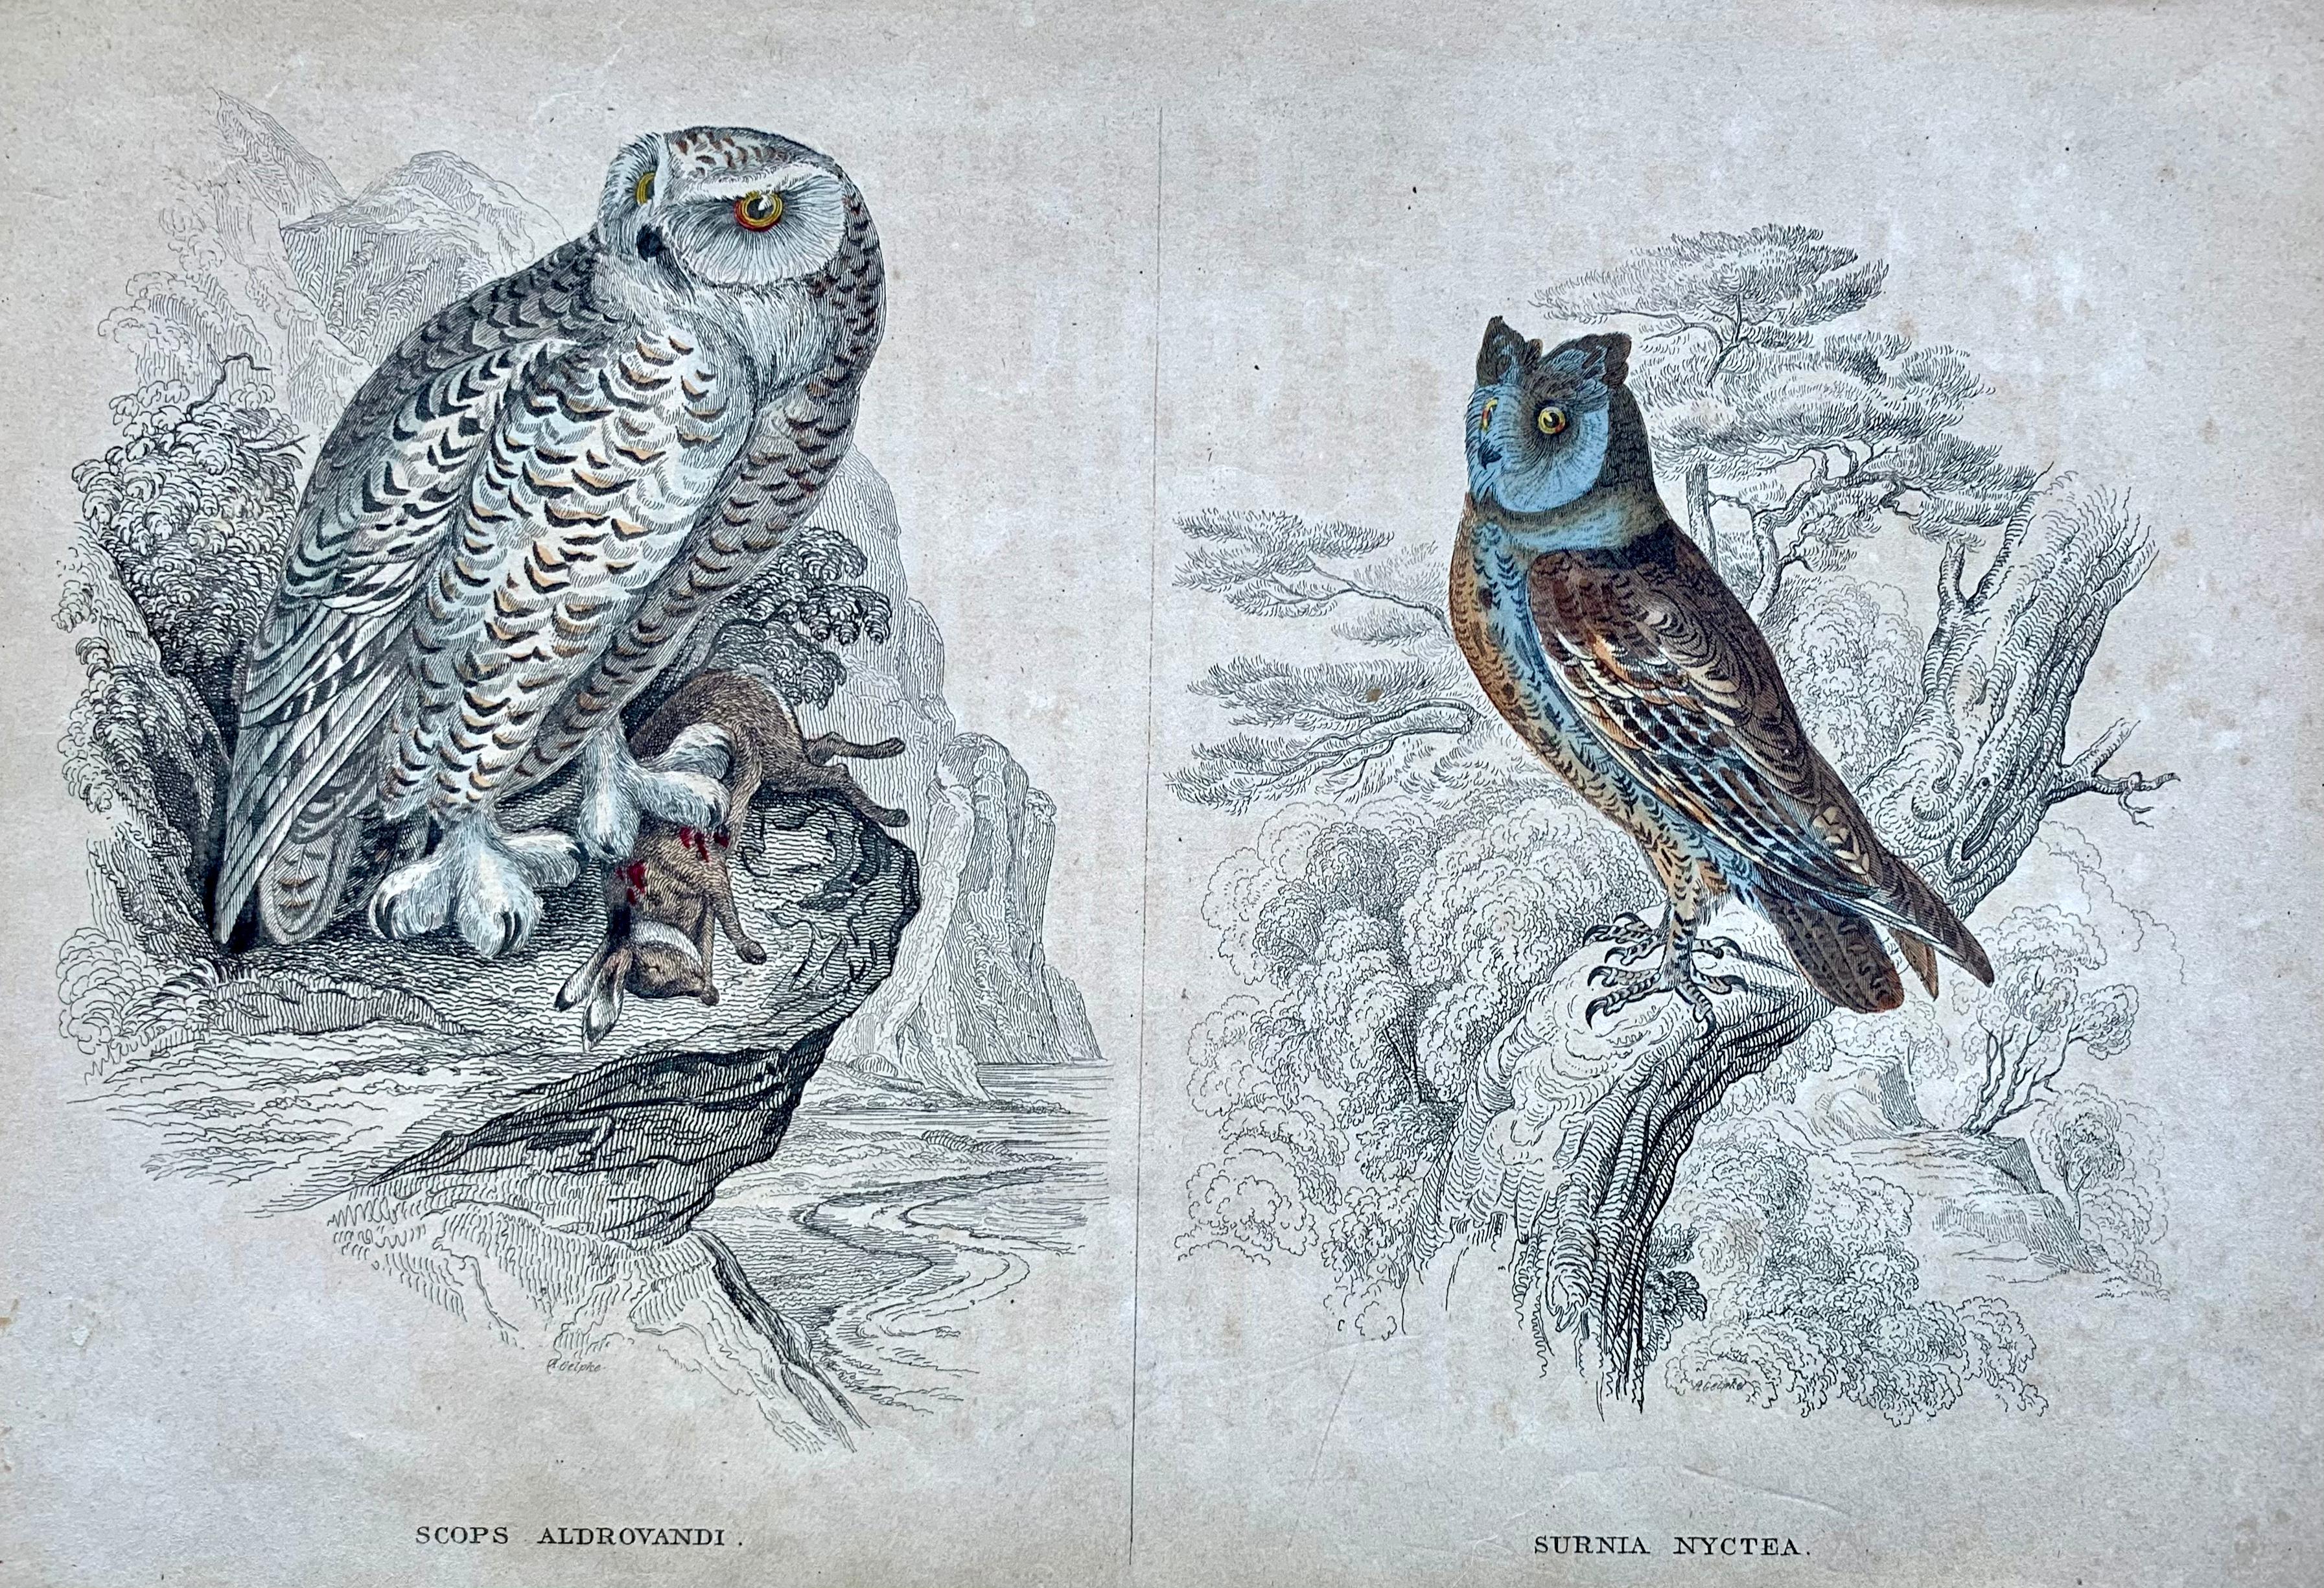 Sir William Jardine, 7th Baronet (after) Landscape Print - Owl Antique Hand Coloured Print - Owls Birds Forest prey